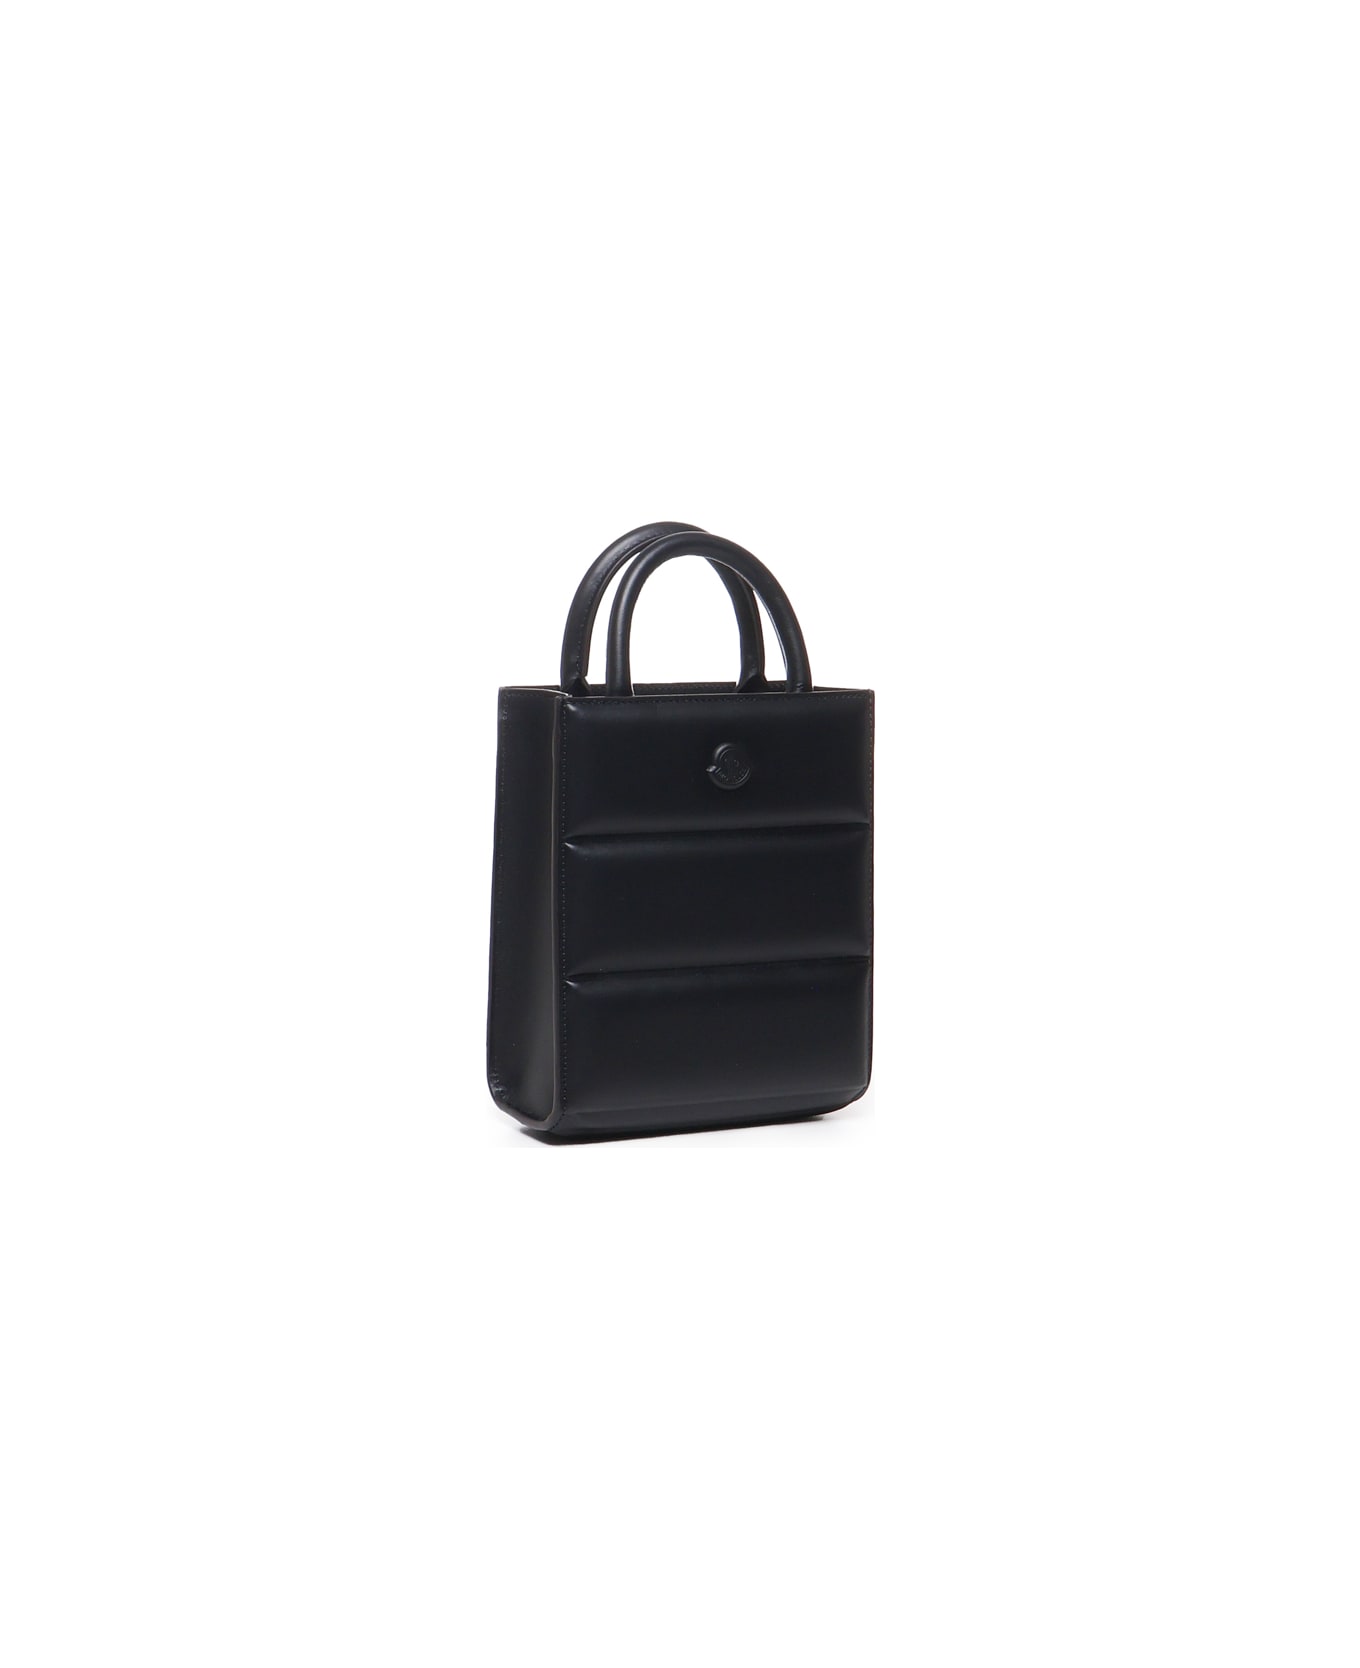 Moncler Leather Doudoune Mini Tote Bag - Nero トートバッグ